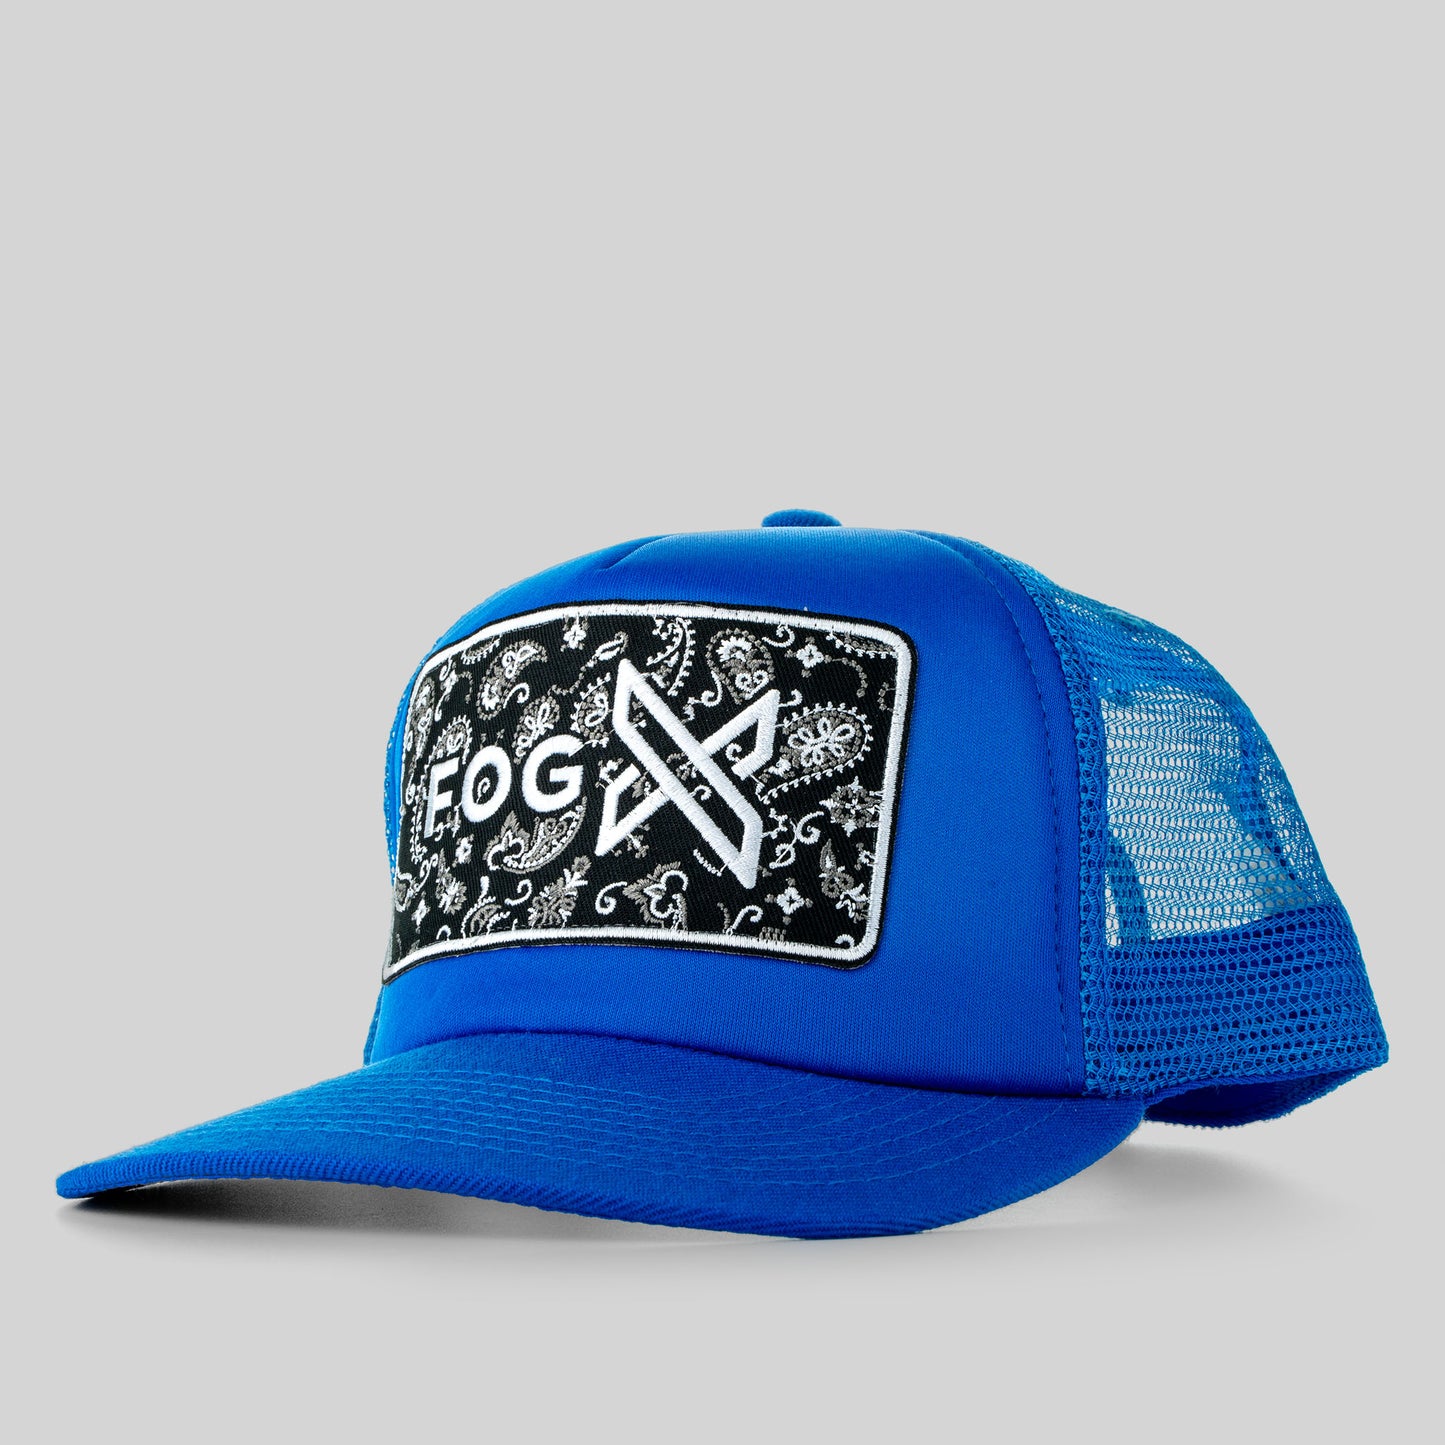 Fog X Trucker Hat Soft Tough Snapback Blue